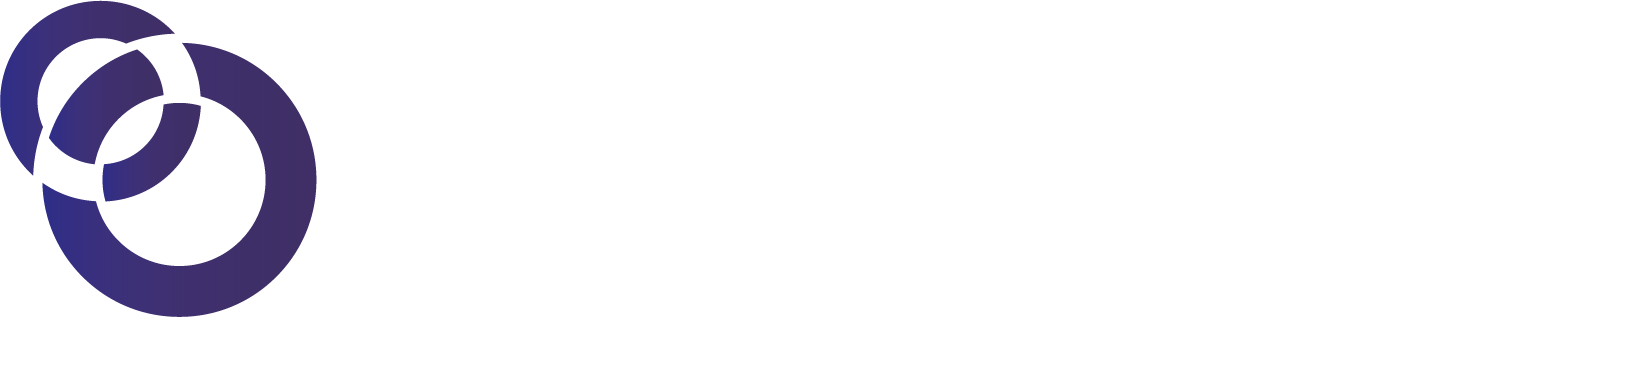 WeboBoost